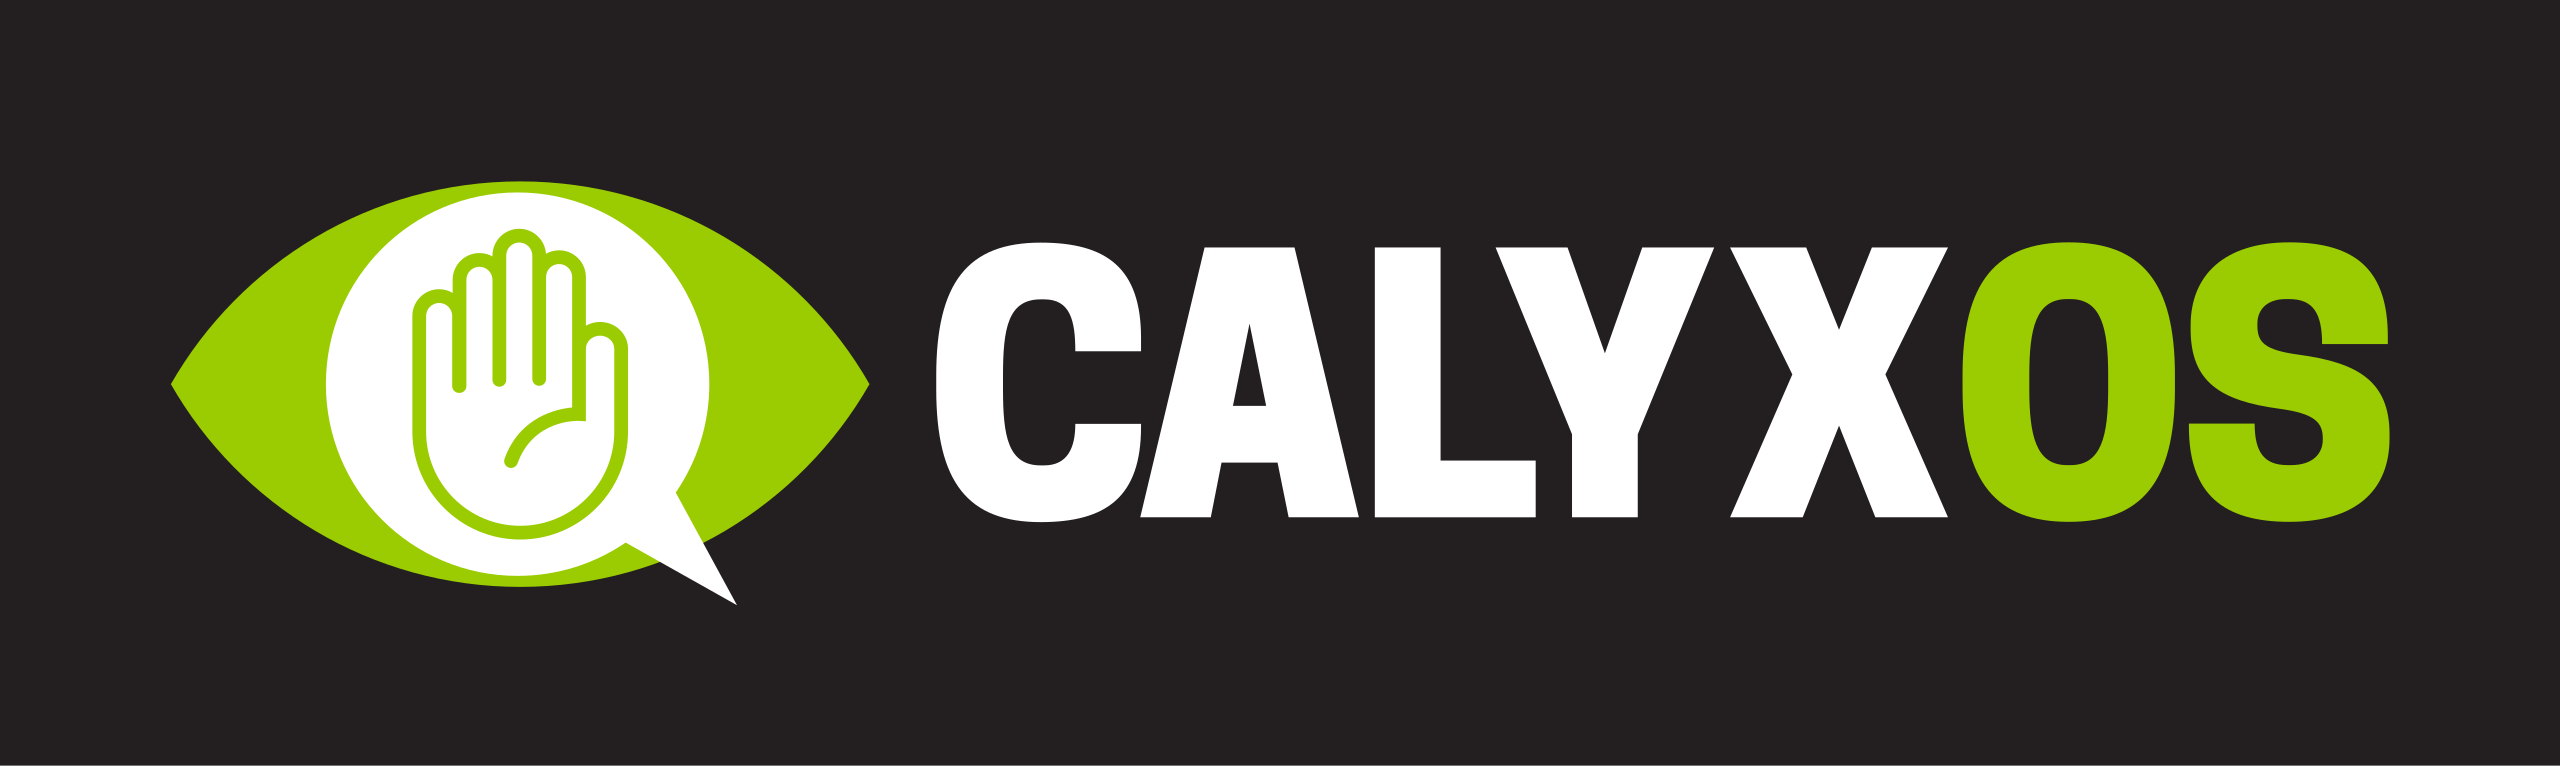 Os calyx Calyx Internet